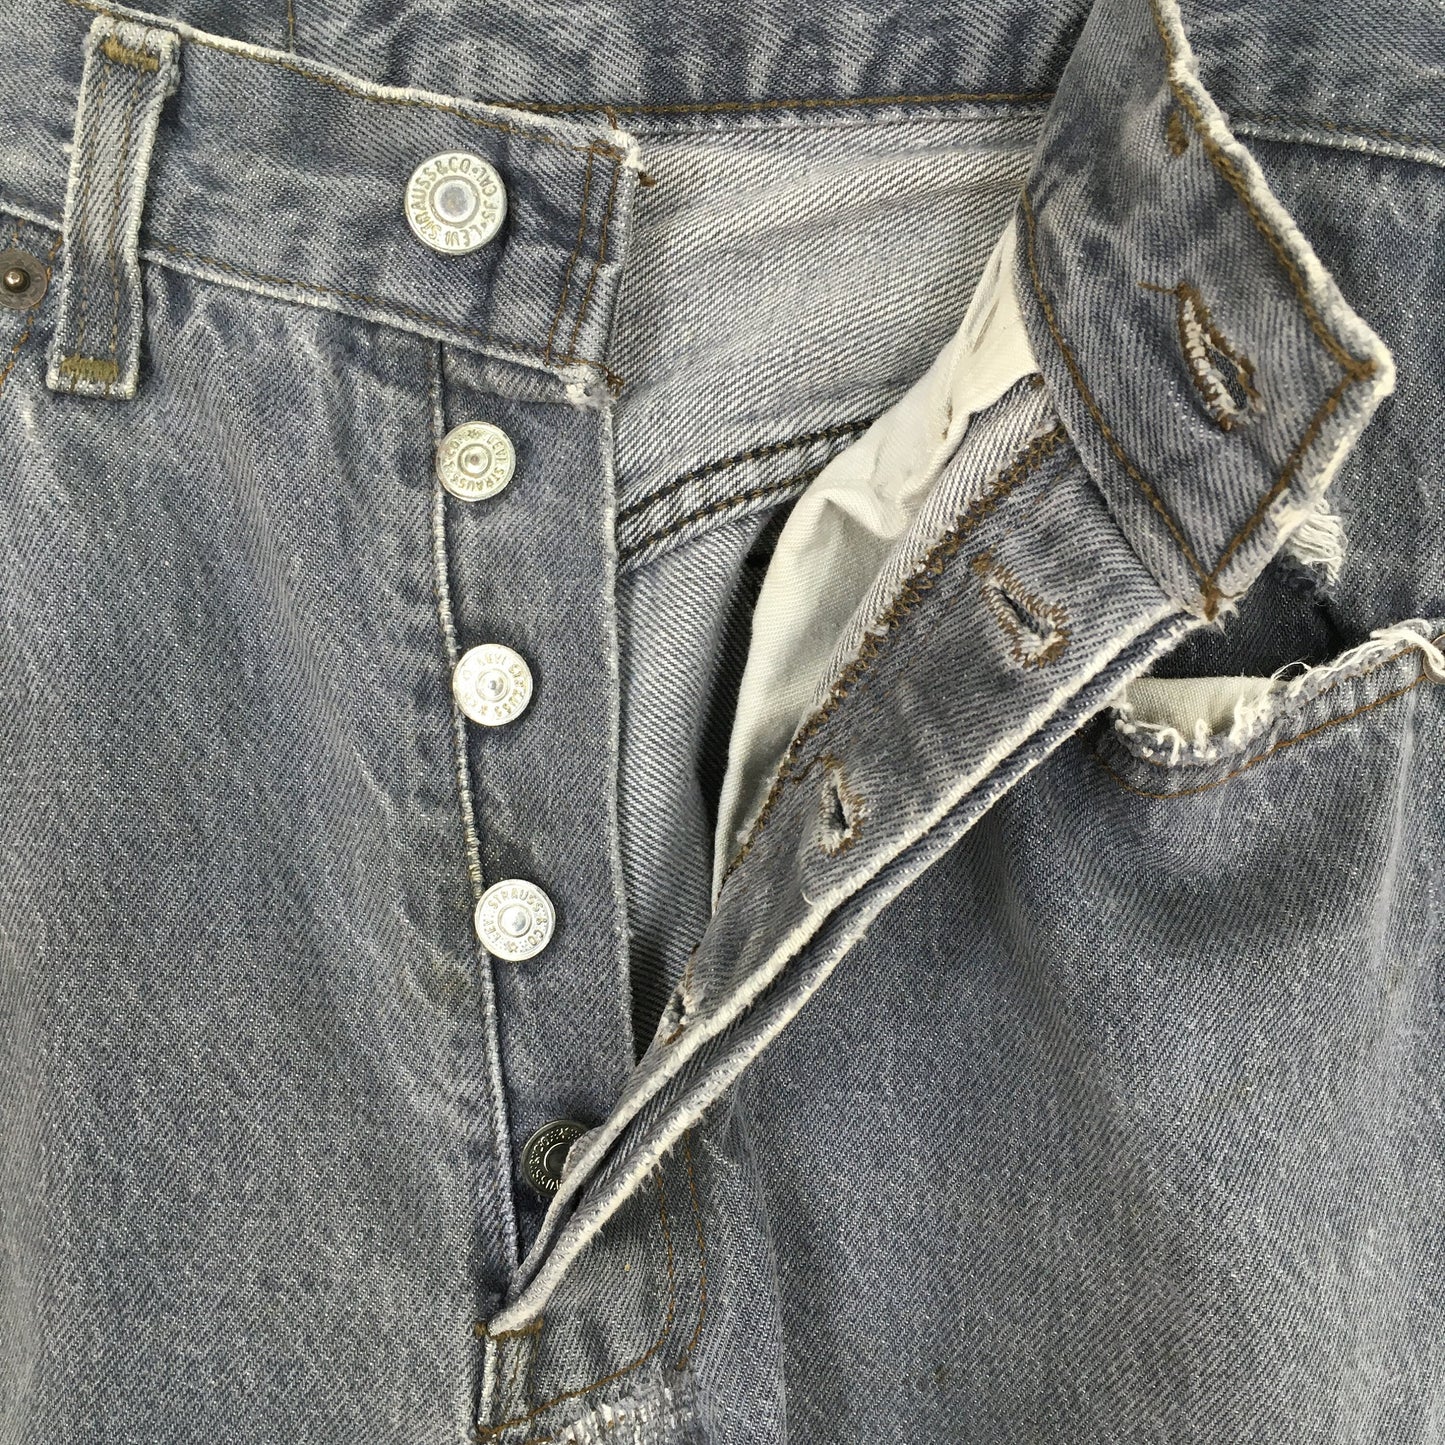 Levi's 501 Ash Gray Distressed Jeans Size 29x29.5